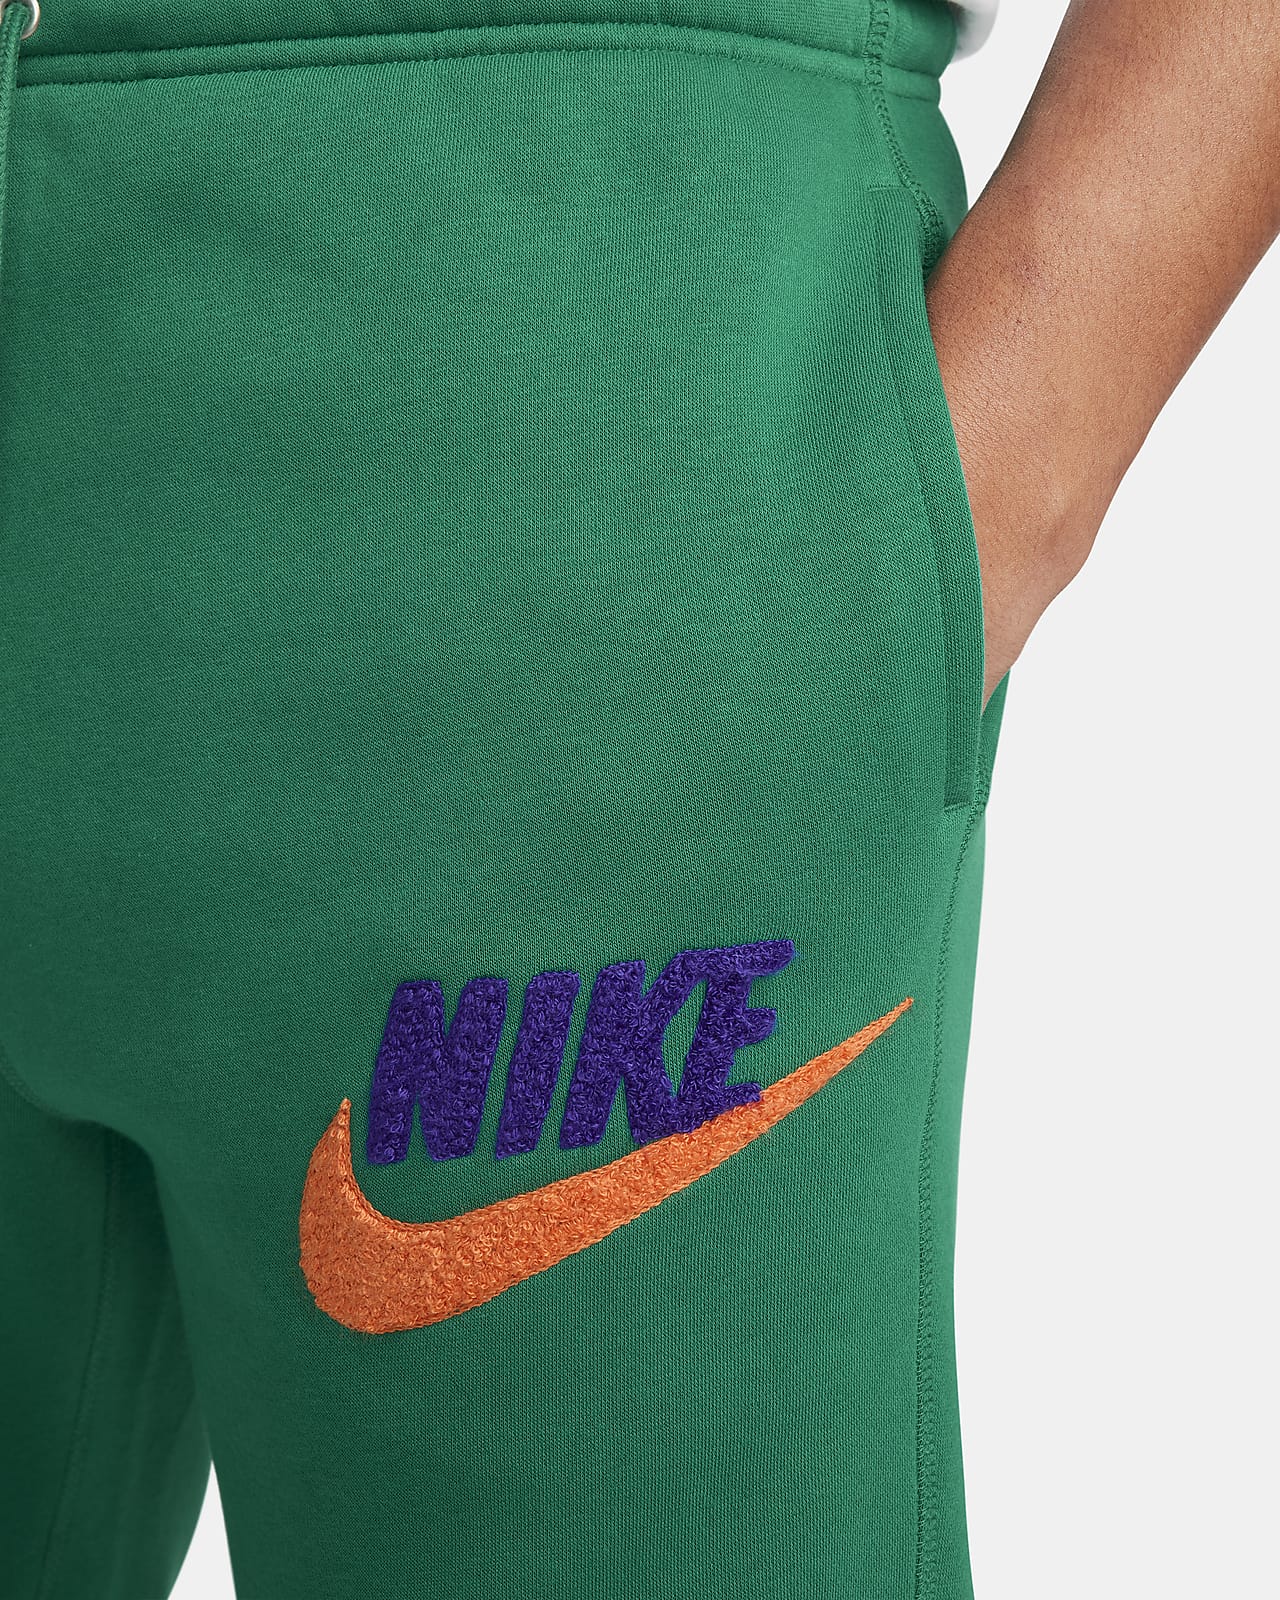 Club Fleece Joggers & Sweatpants. Nike RO